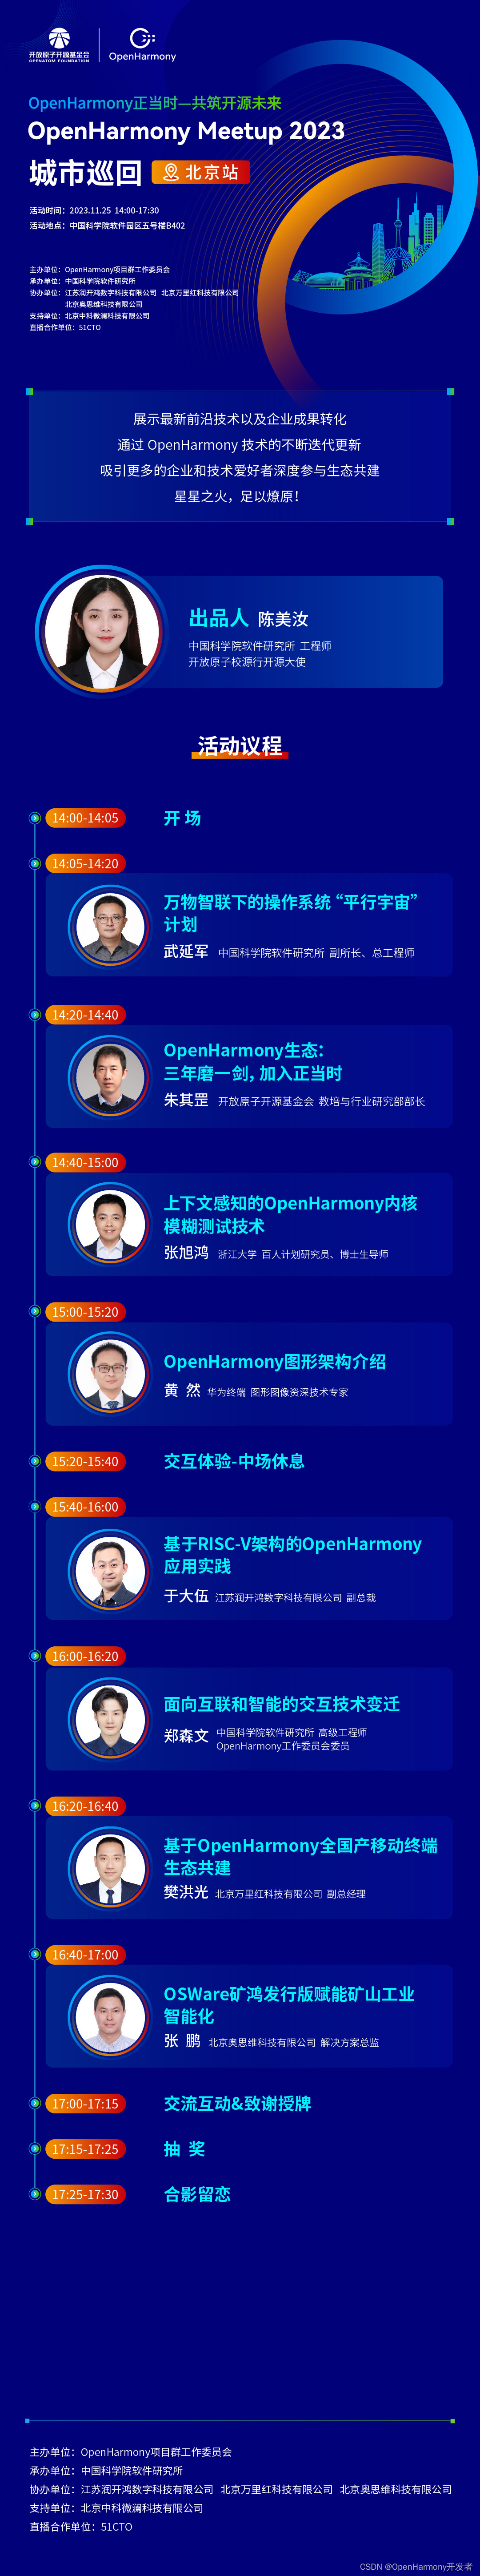 OpenHarmony Meetup北京站招募令